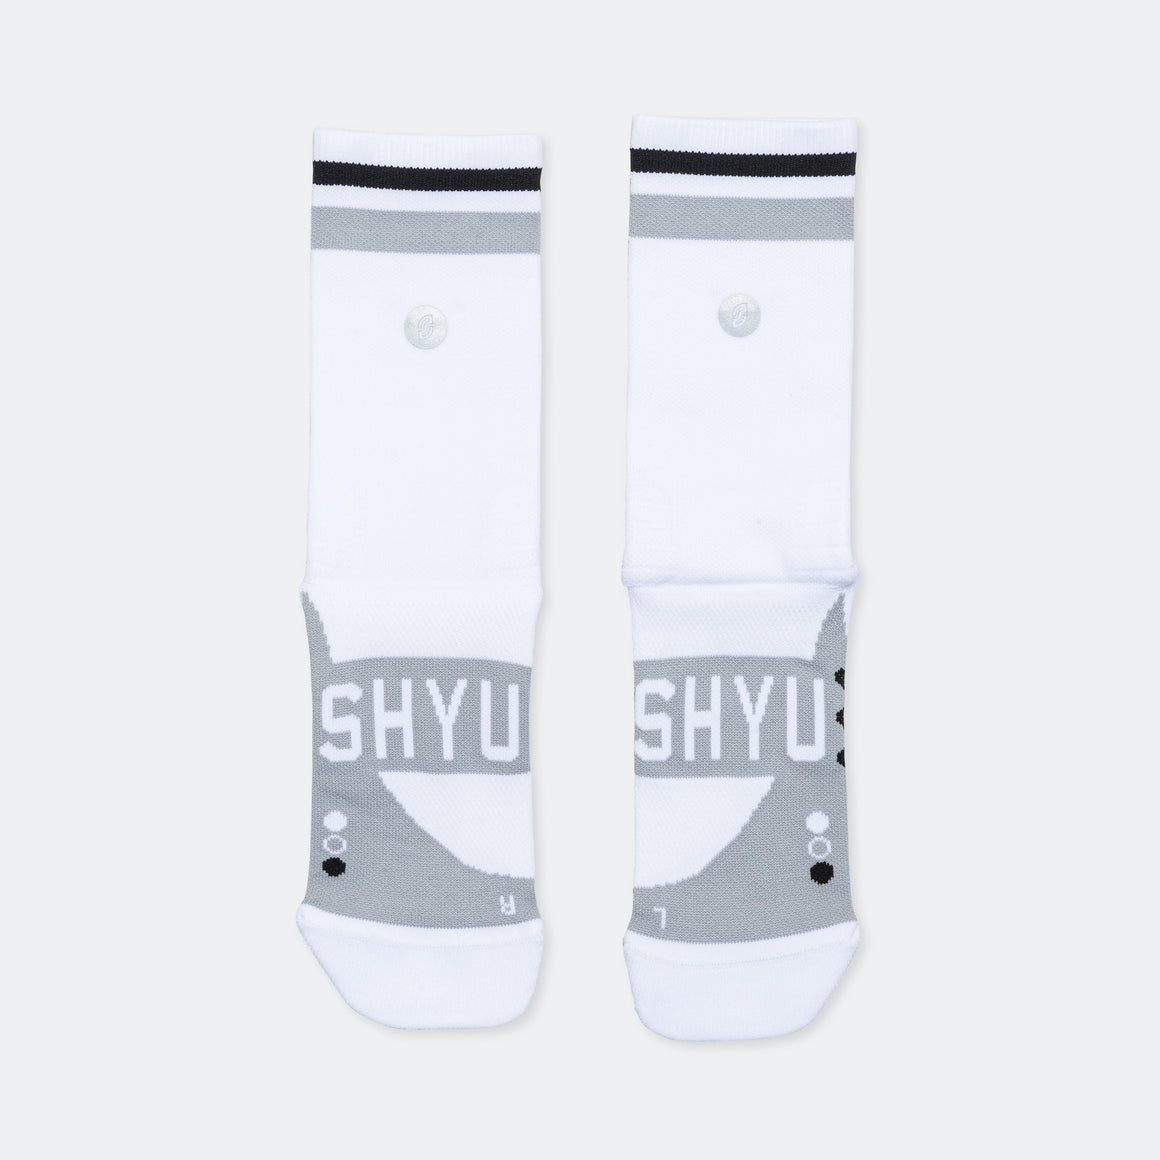 Shyu - Half Crew Racing Socks - White/Grey/Black - Up There Athletics